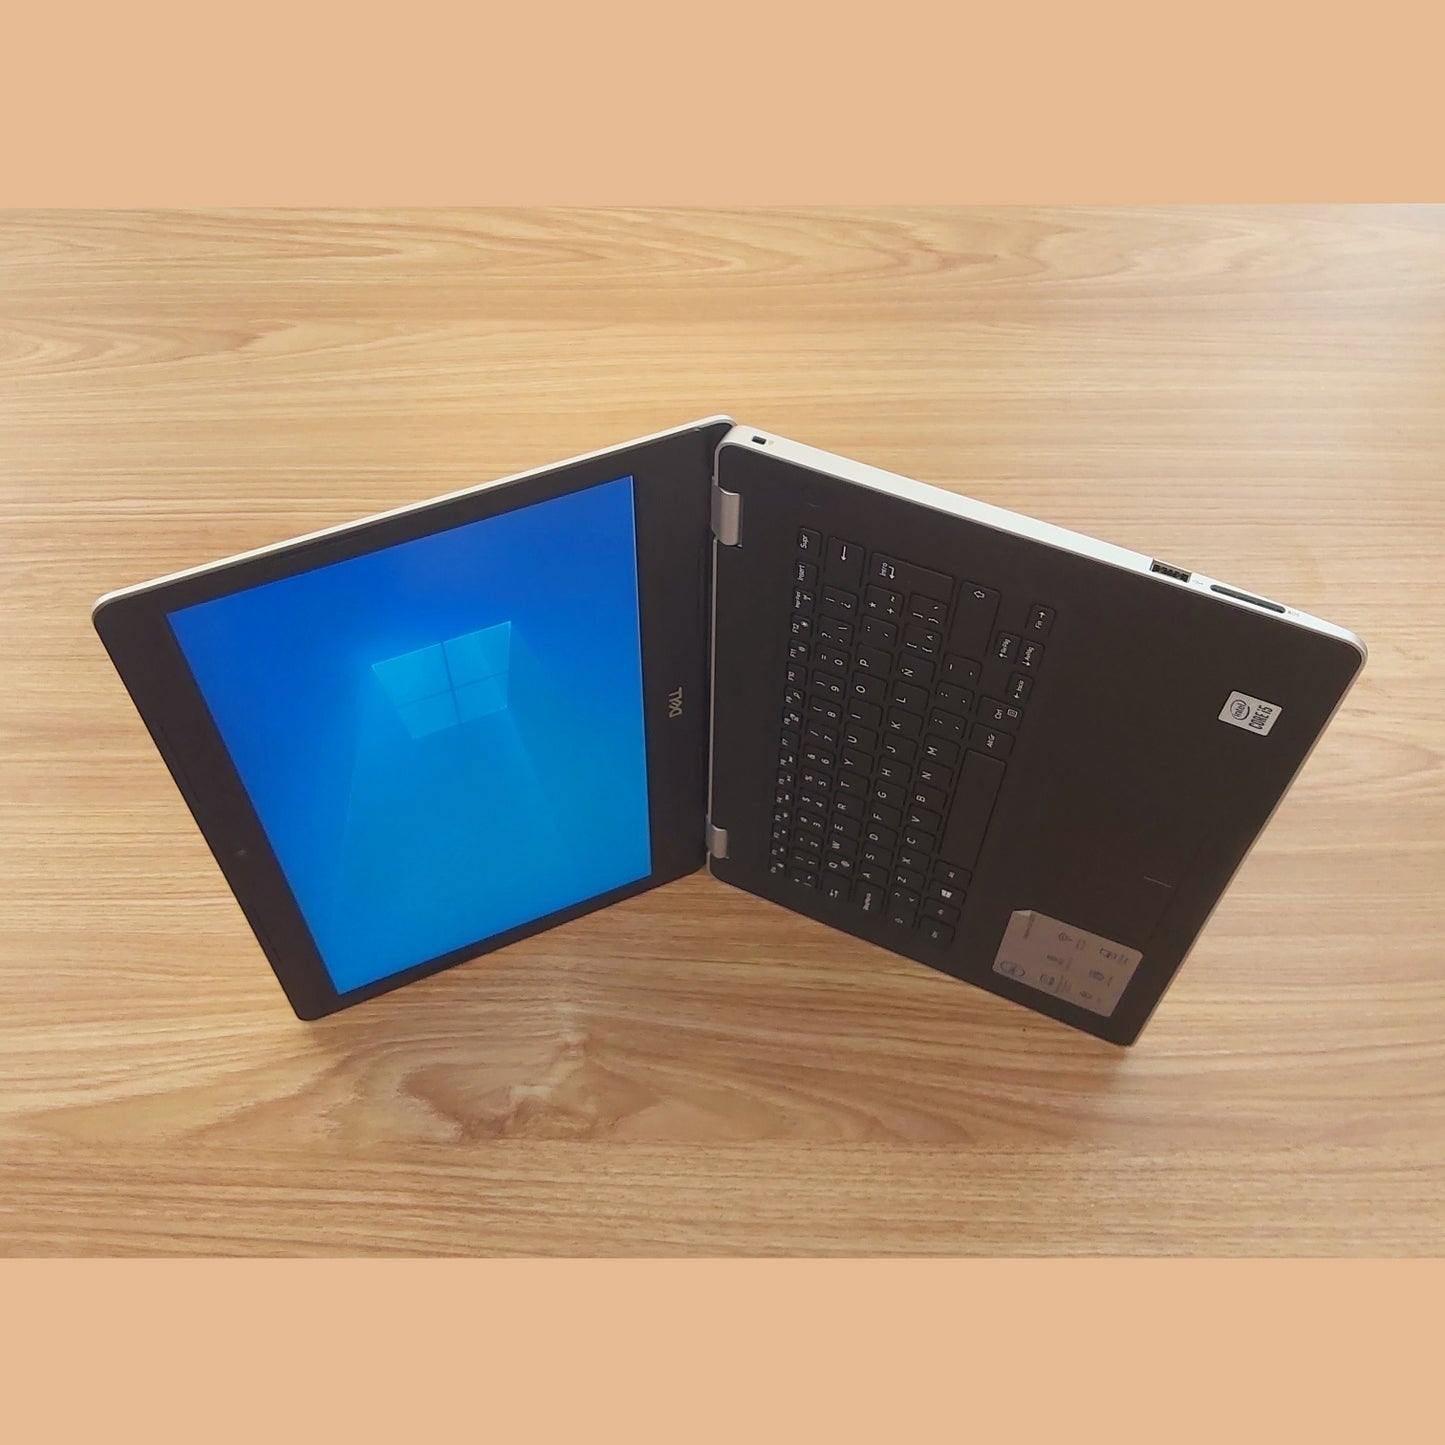 Dell 3493 Inspiron 14 Laptop (New Open Box)